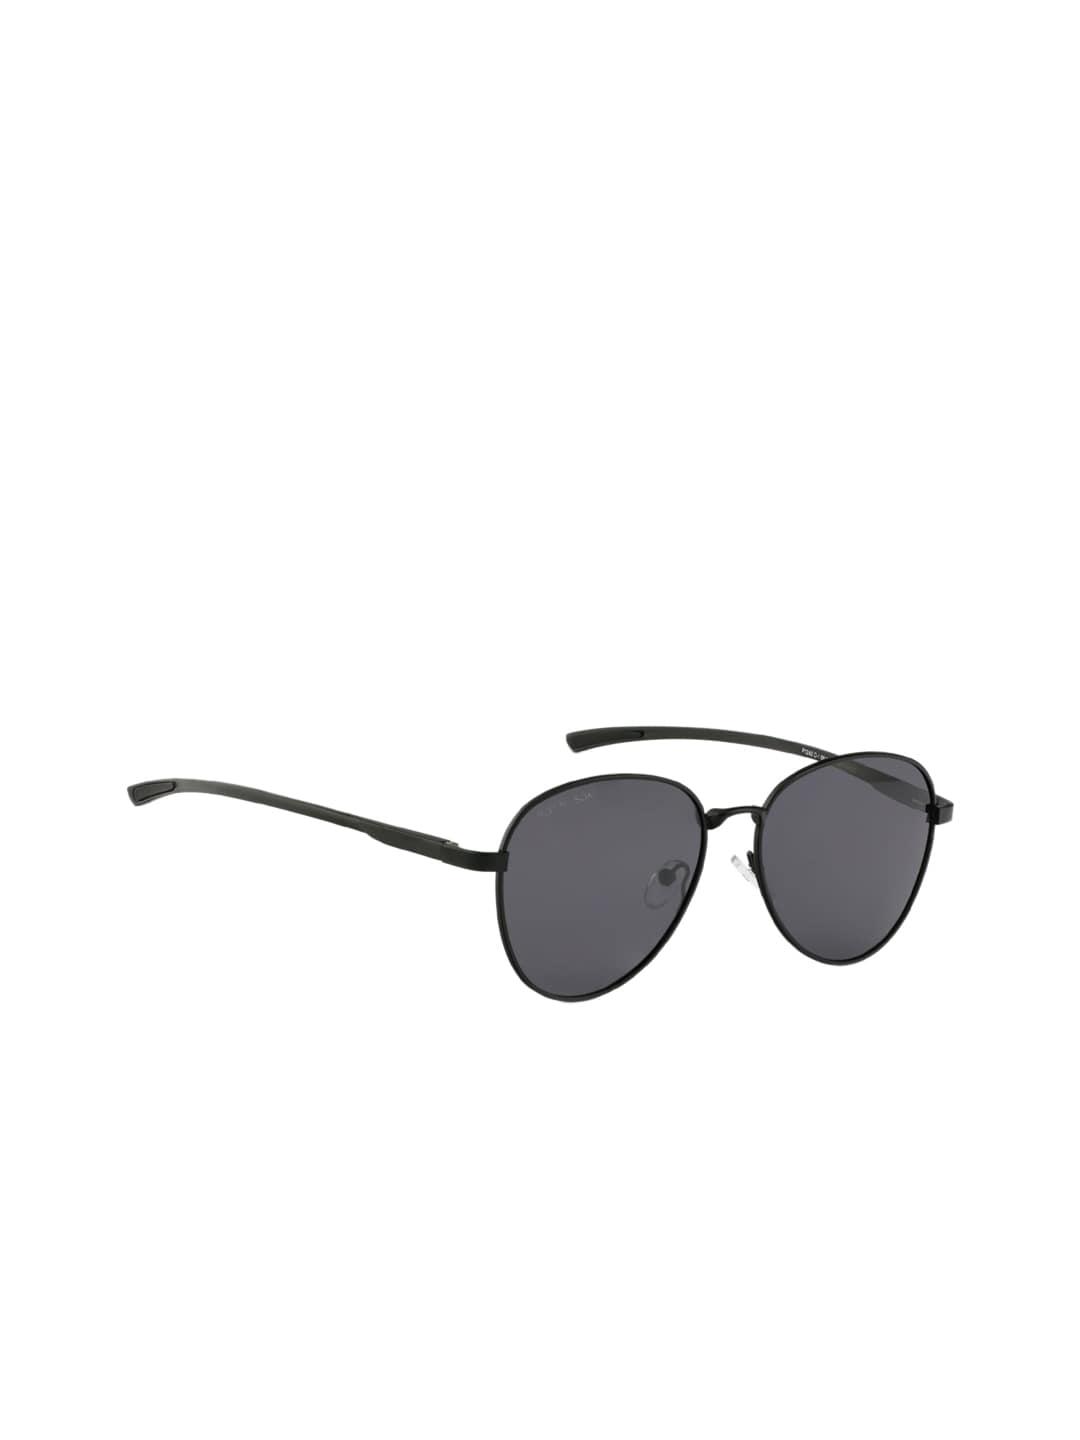 ROYAL SON Unisex Black Lens Aviator Polarized Sunglasses CHI00105-C1